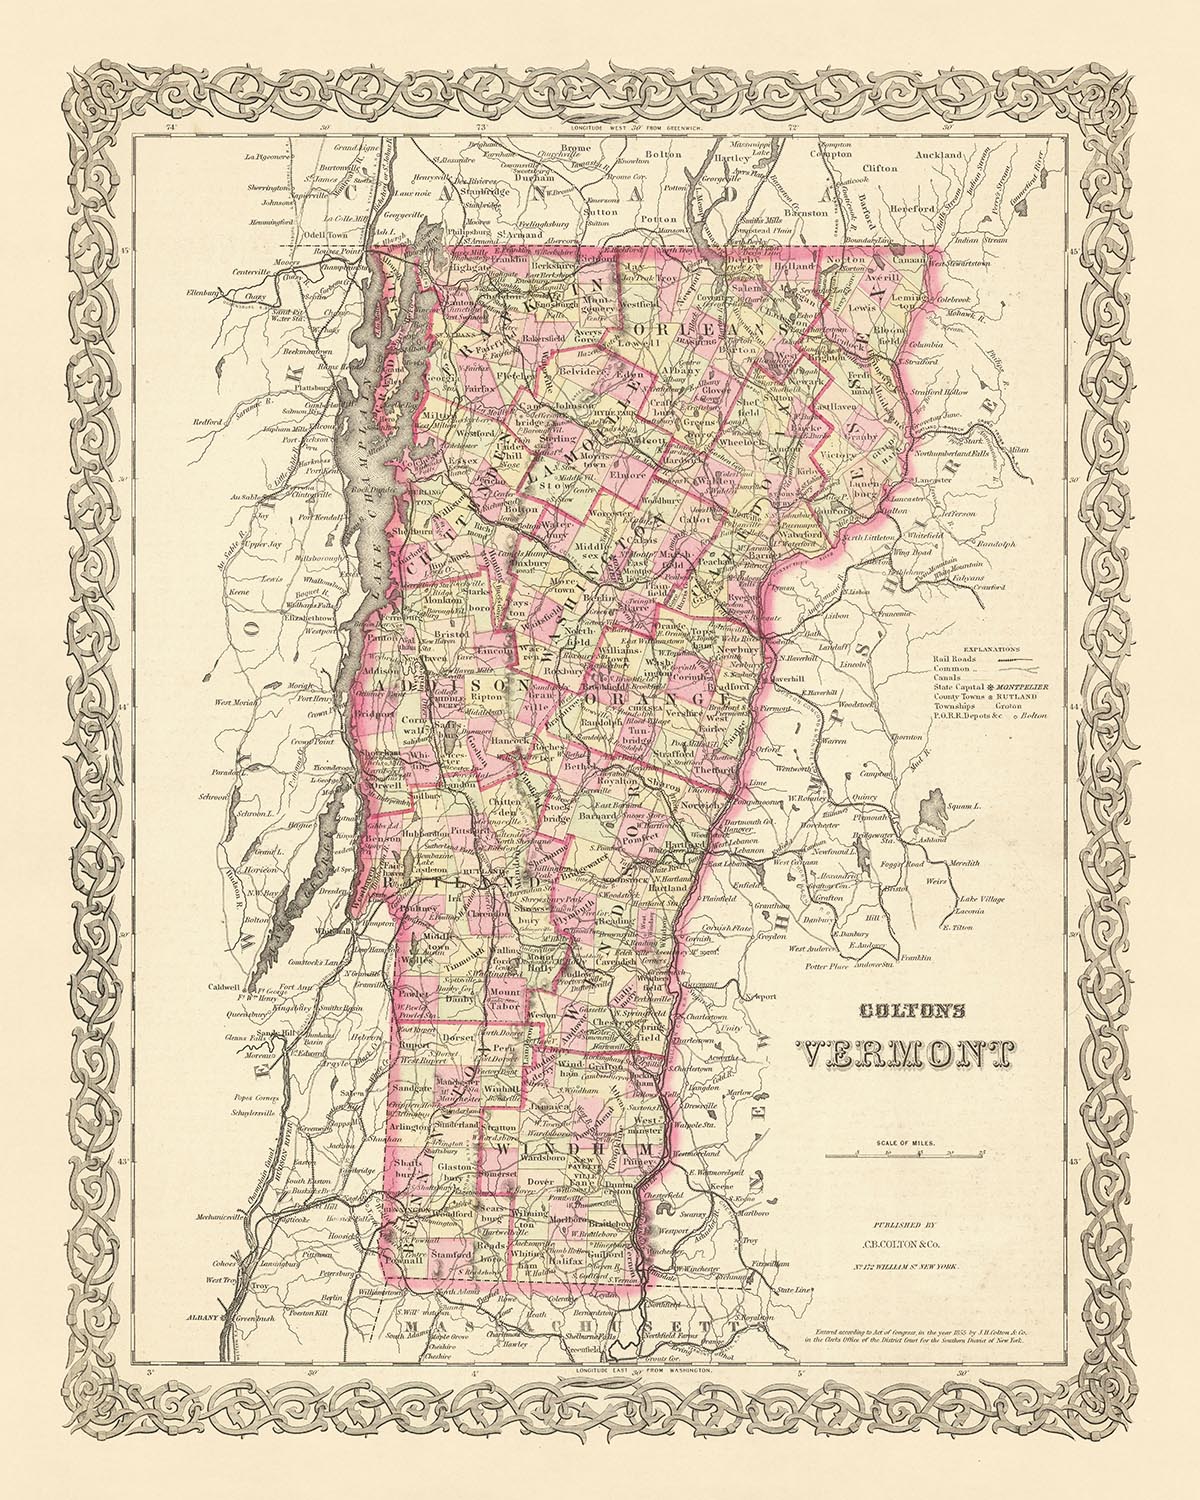 Old Map of Vermont by J.H. Colton, 1855: Burlington, Montpelier, Rutland, Brattleboro, St. Albans